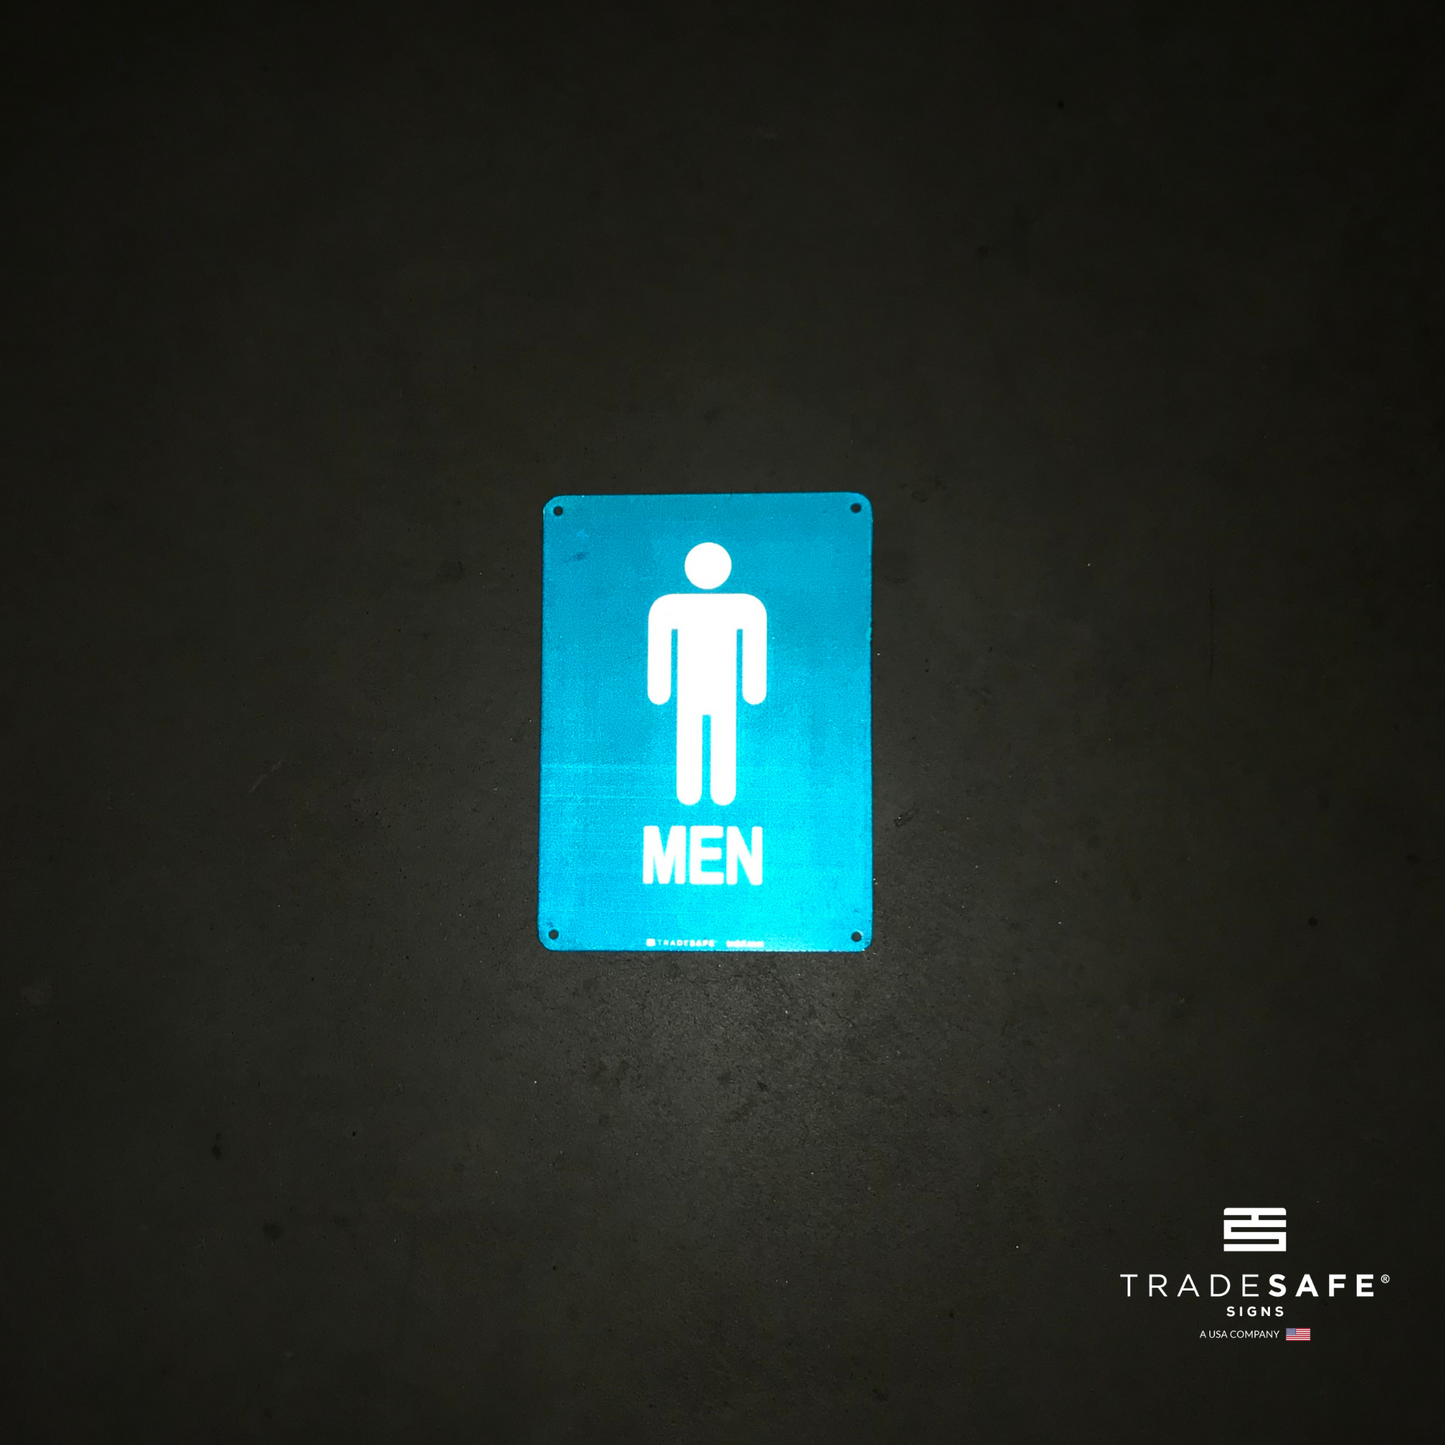 reflective attribute of men's restroom sign on black background